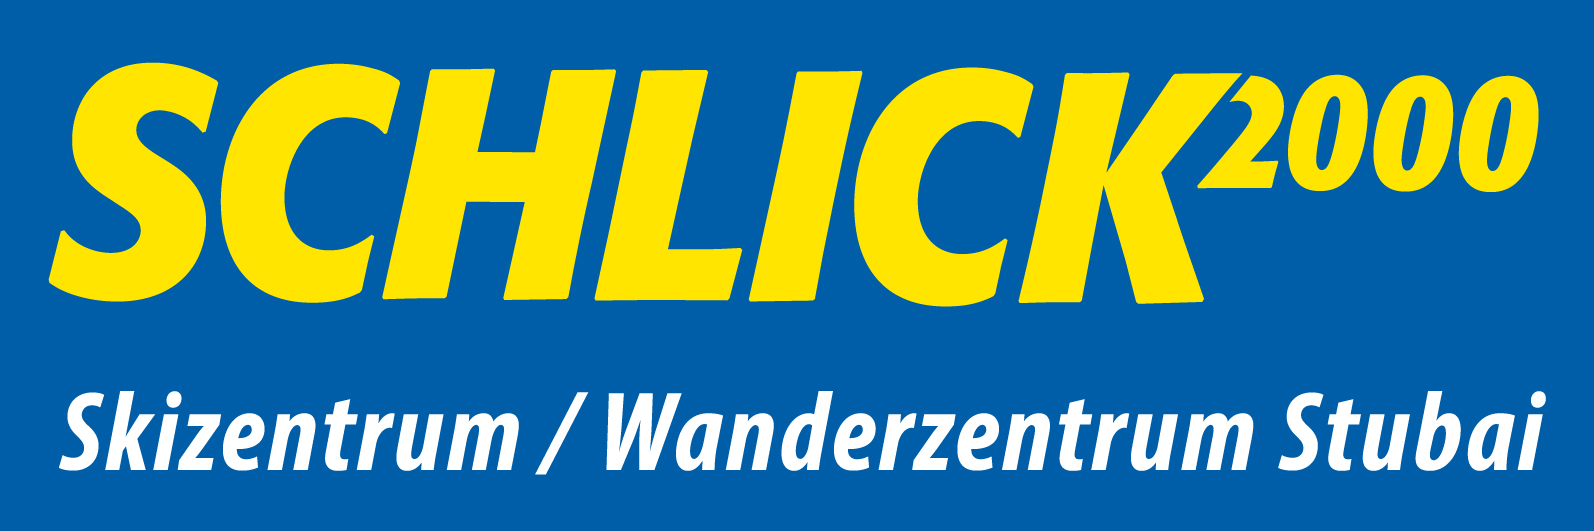 Fulpmes/Schlick 2000 - Logo